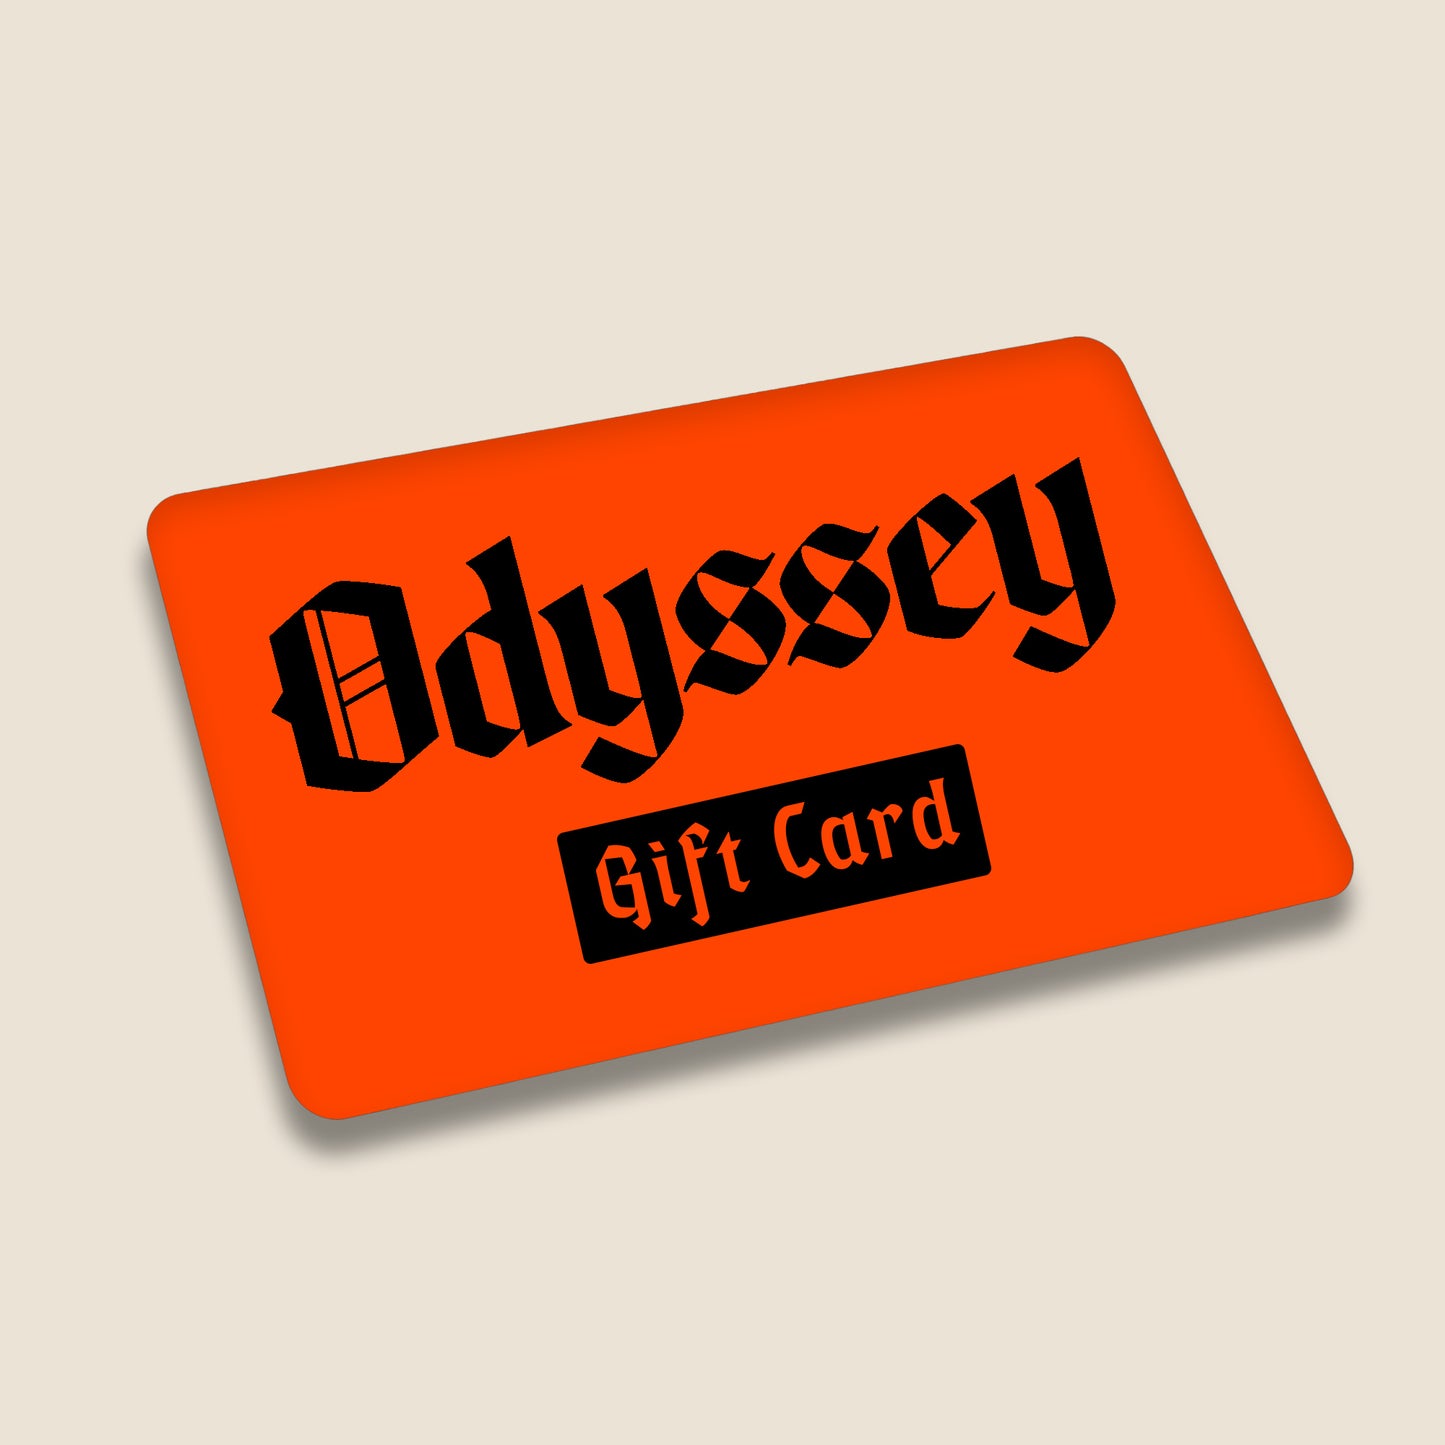 Odyssey gift card